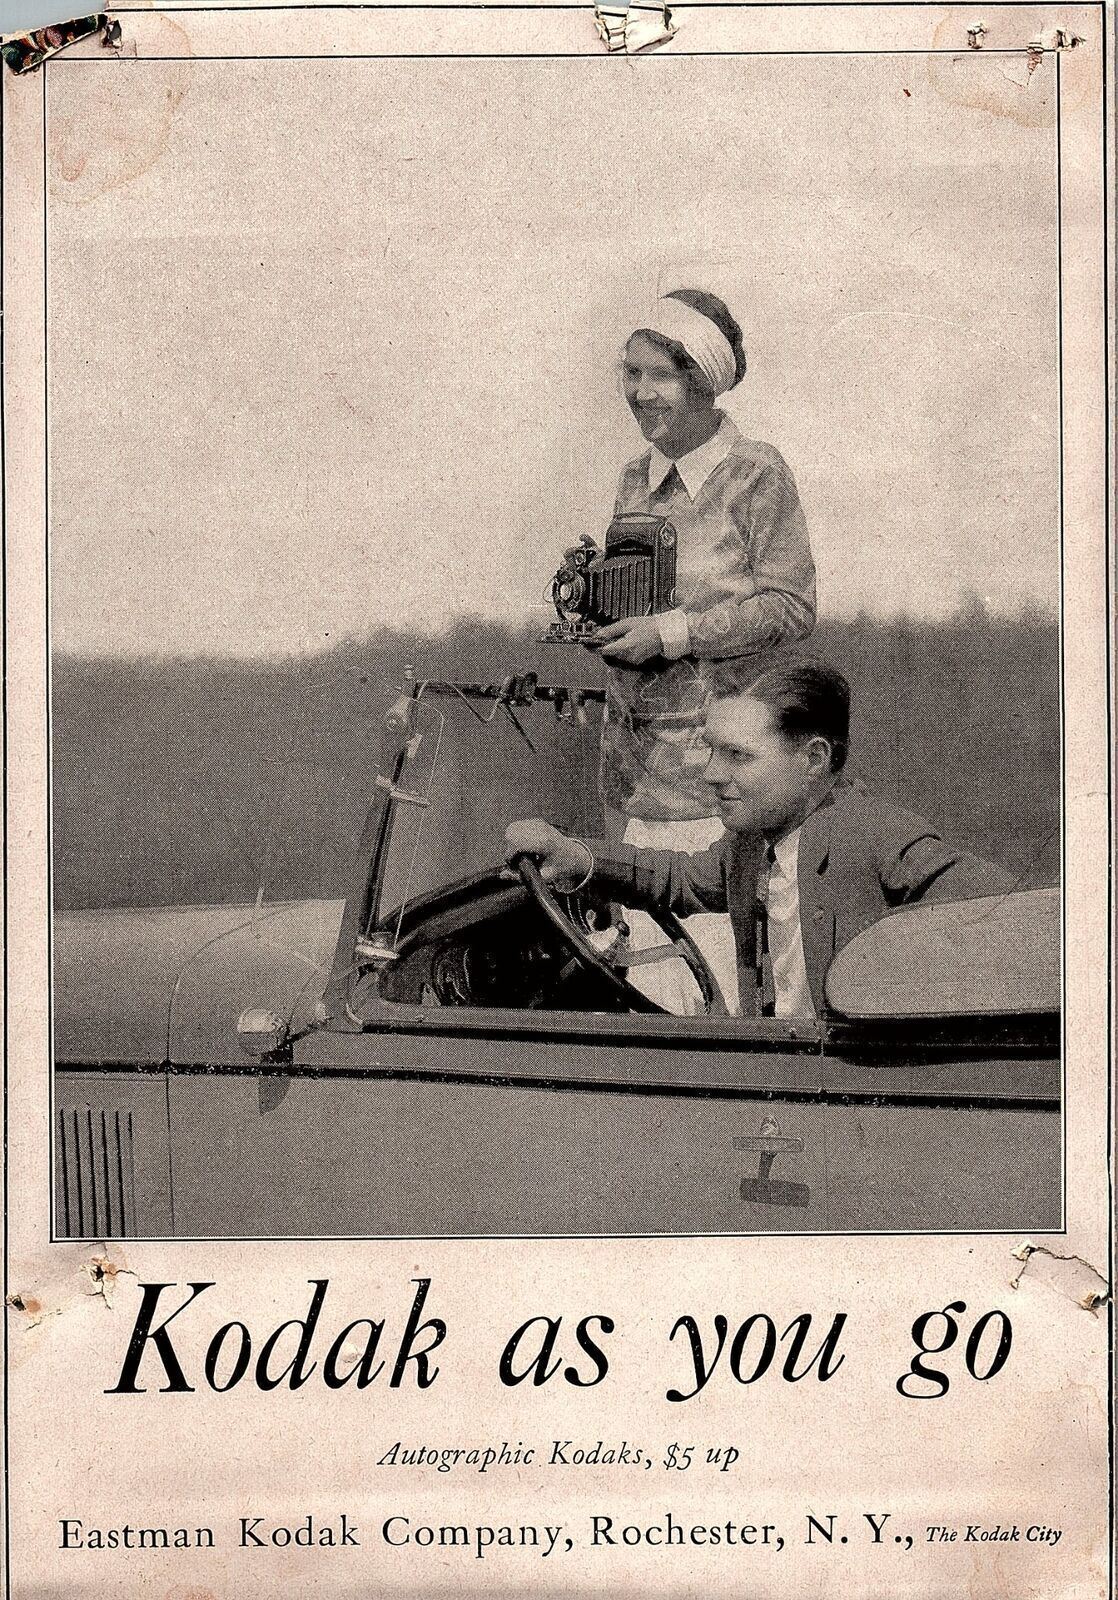 1930s EASTMAN KODAK KODAK AS YOU GO AUTOGRAPHIC VINTAGE AUTO ADVERTISEMENT 37-31